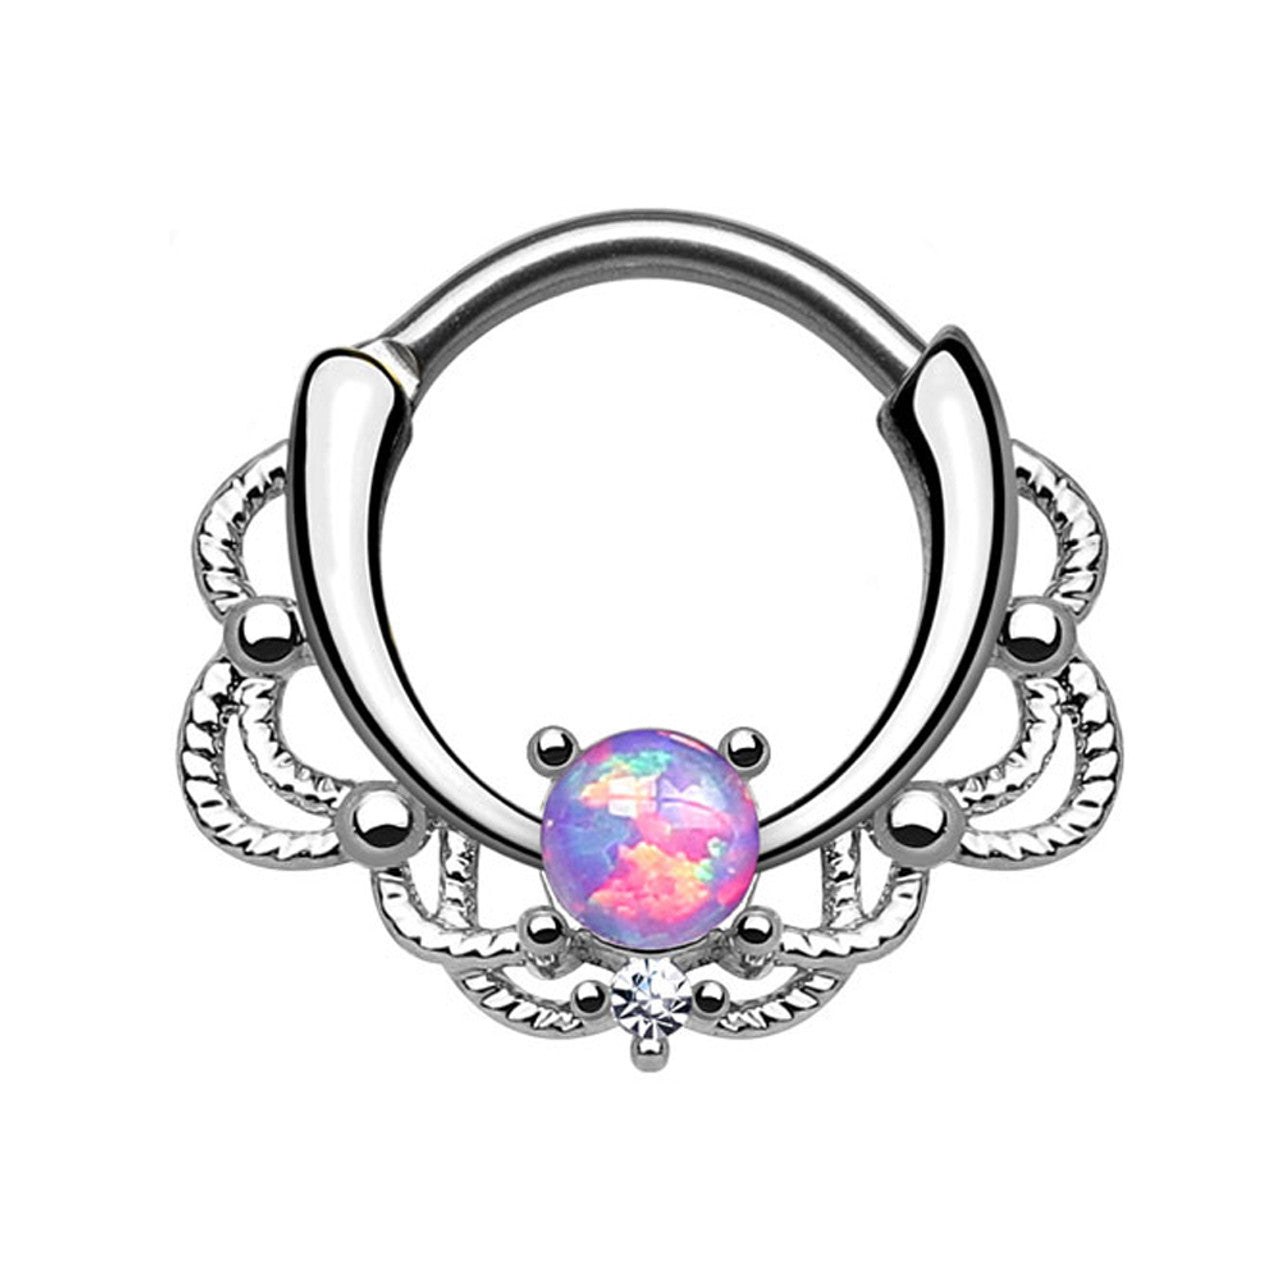 Surgical Steel Septum Clicker Ring 16 Gauge with Lace Design Opal Gem